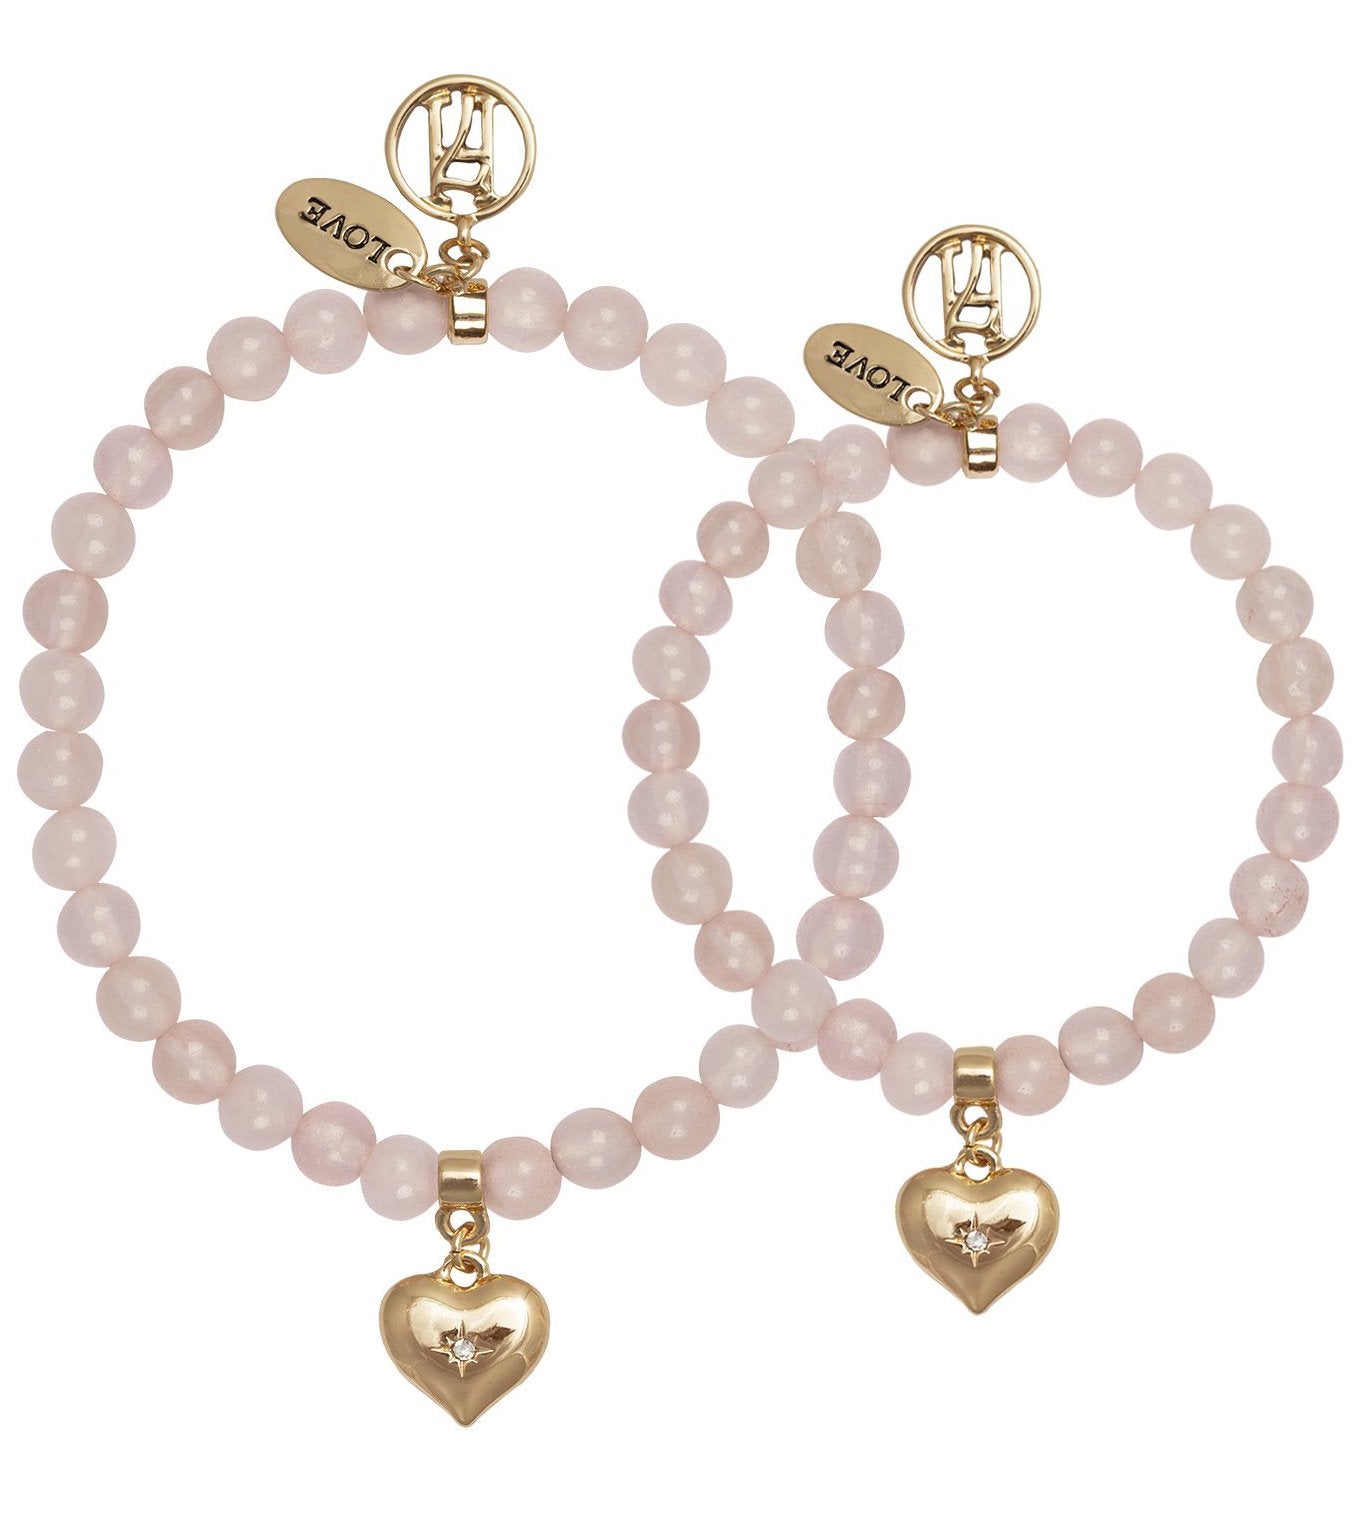 Rose-Quartz LOVE Bracelet with Charm for Passion & Relationships